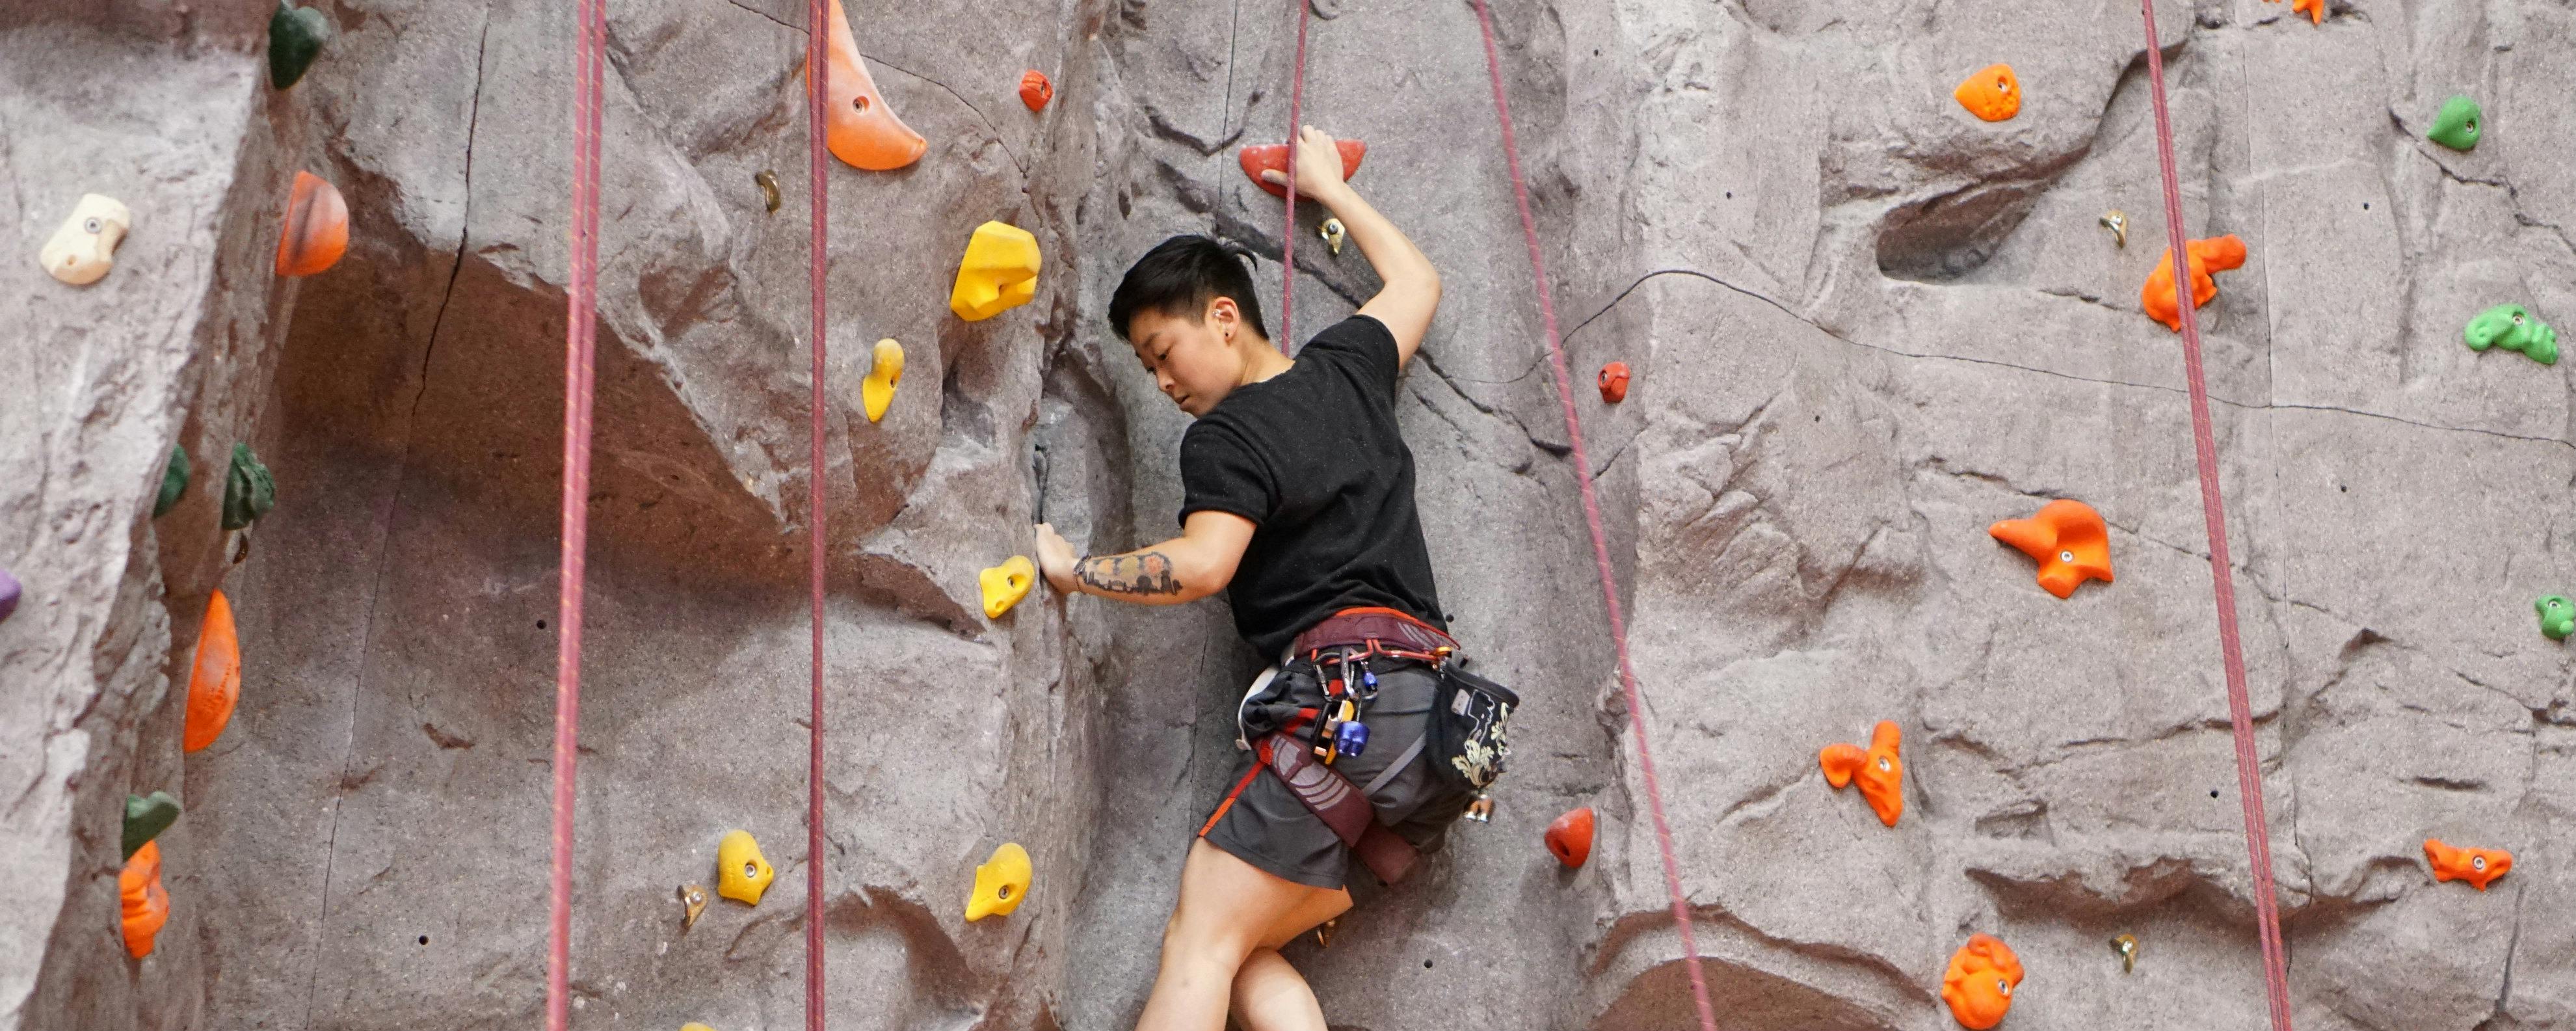 How to start rock climbing